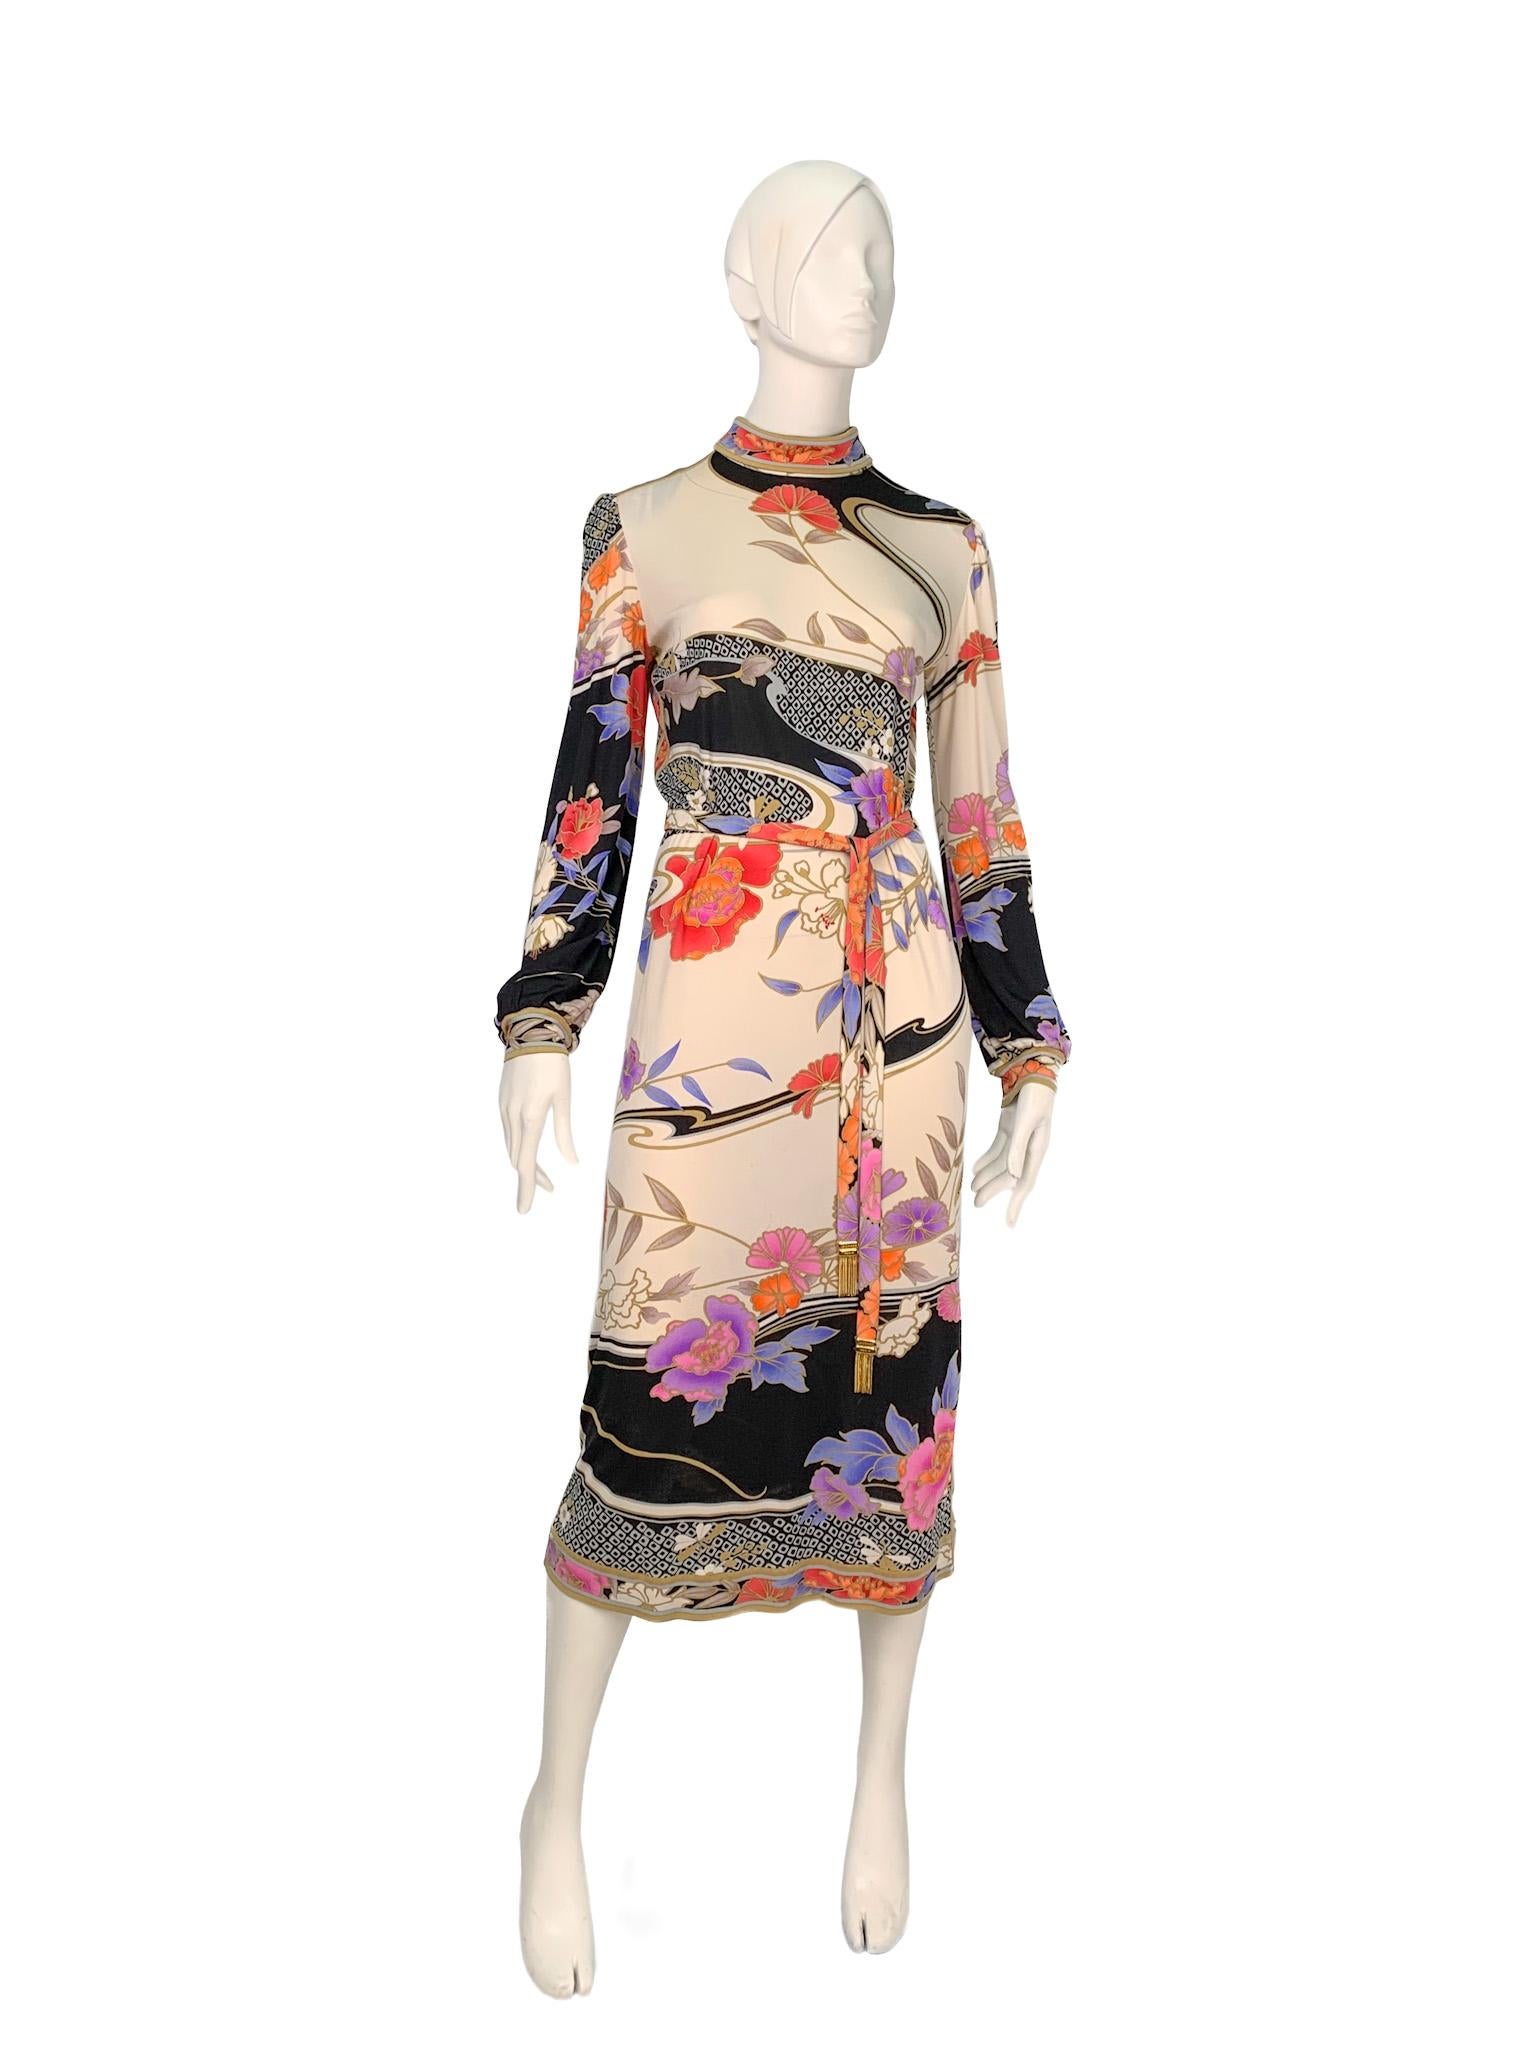 Women's Leonard Paris printed dress in 100% mikado silk jersey.